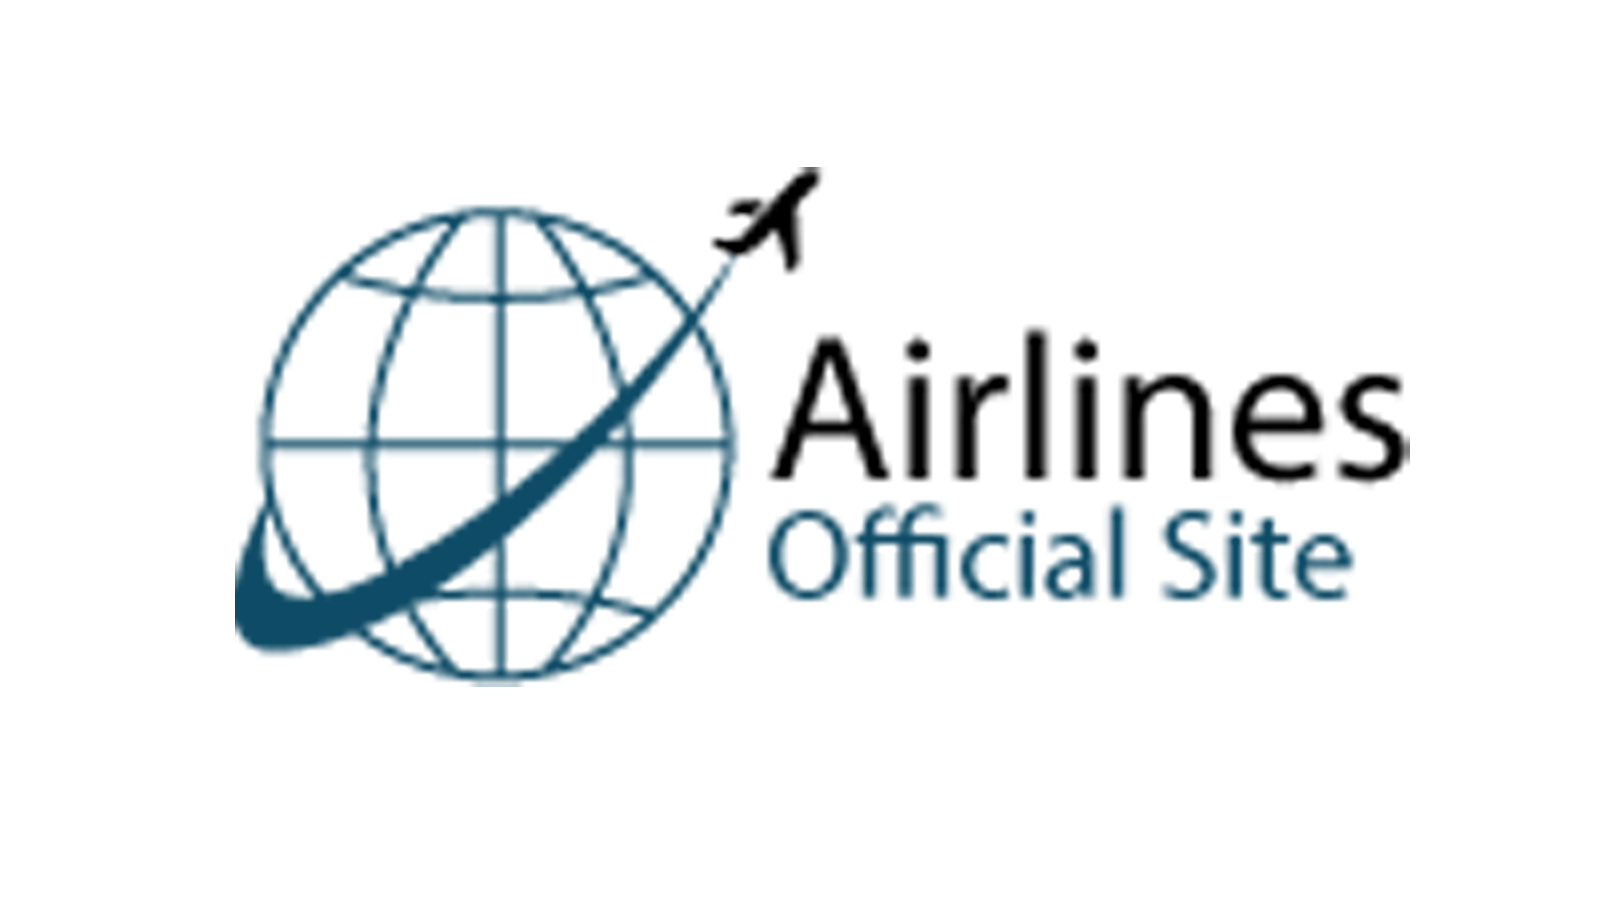 Airlines Official Site - Sourav Mondal